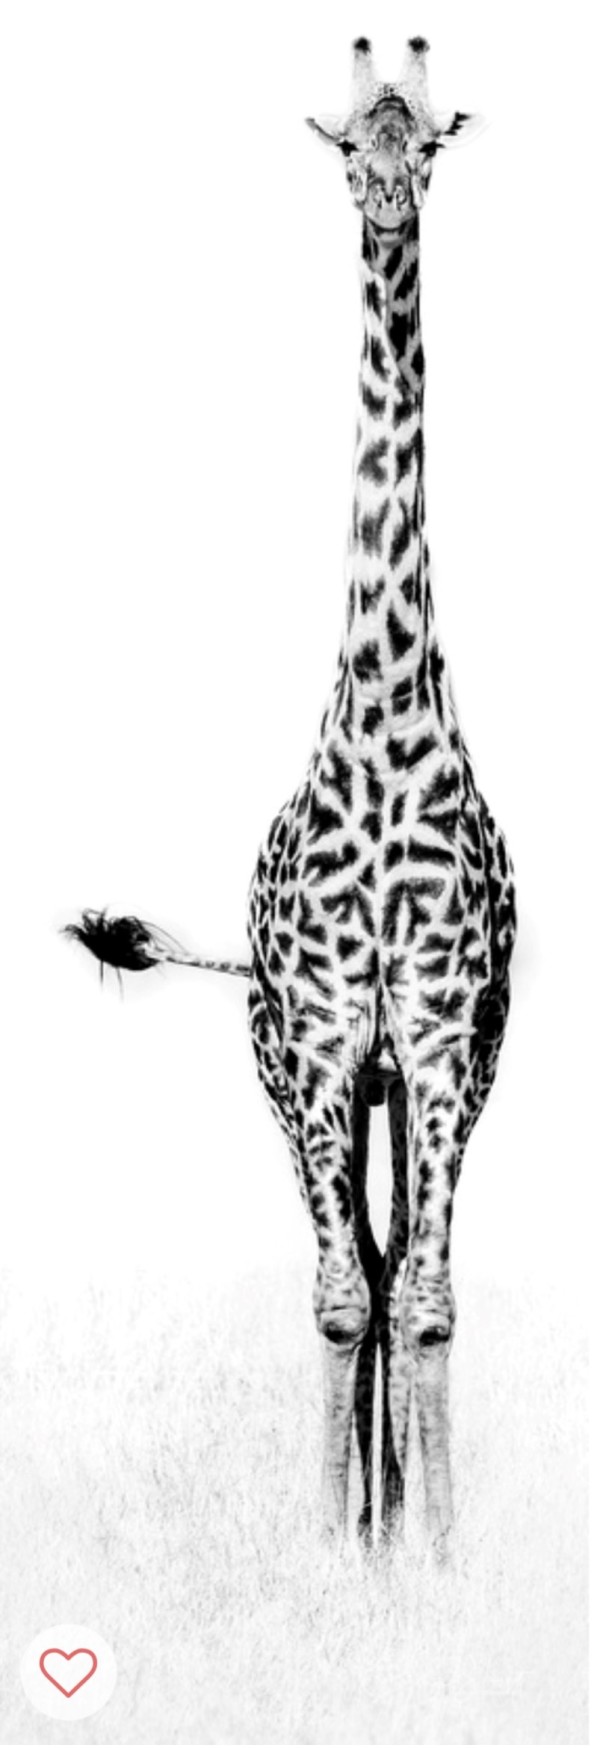 (42) Tall Giraffe by Cathy Smart